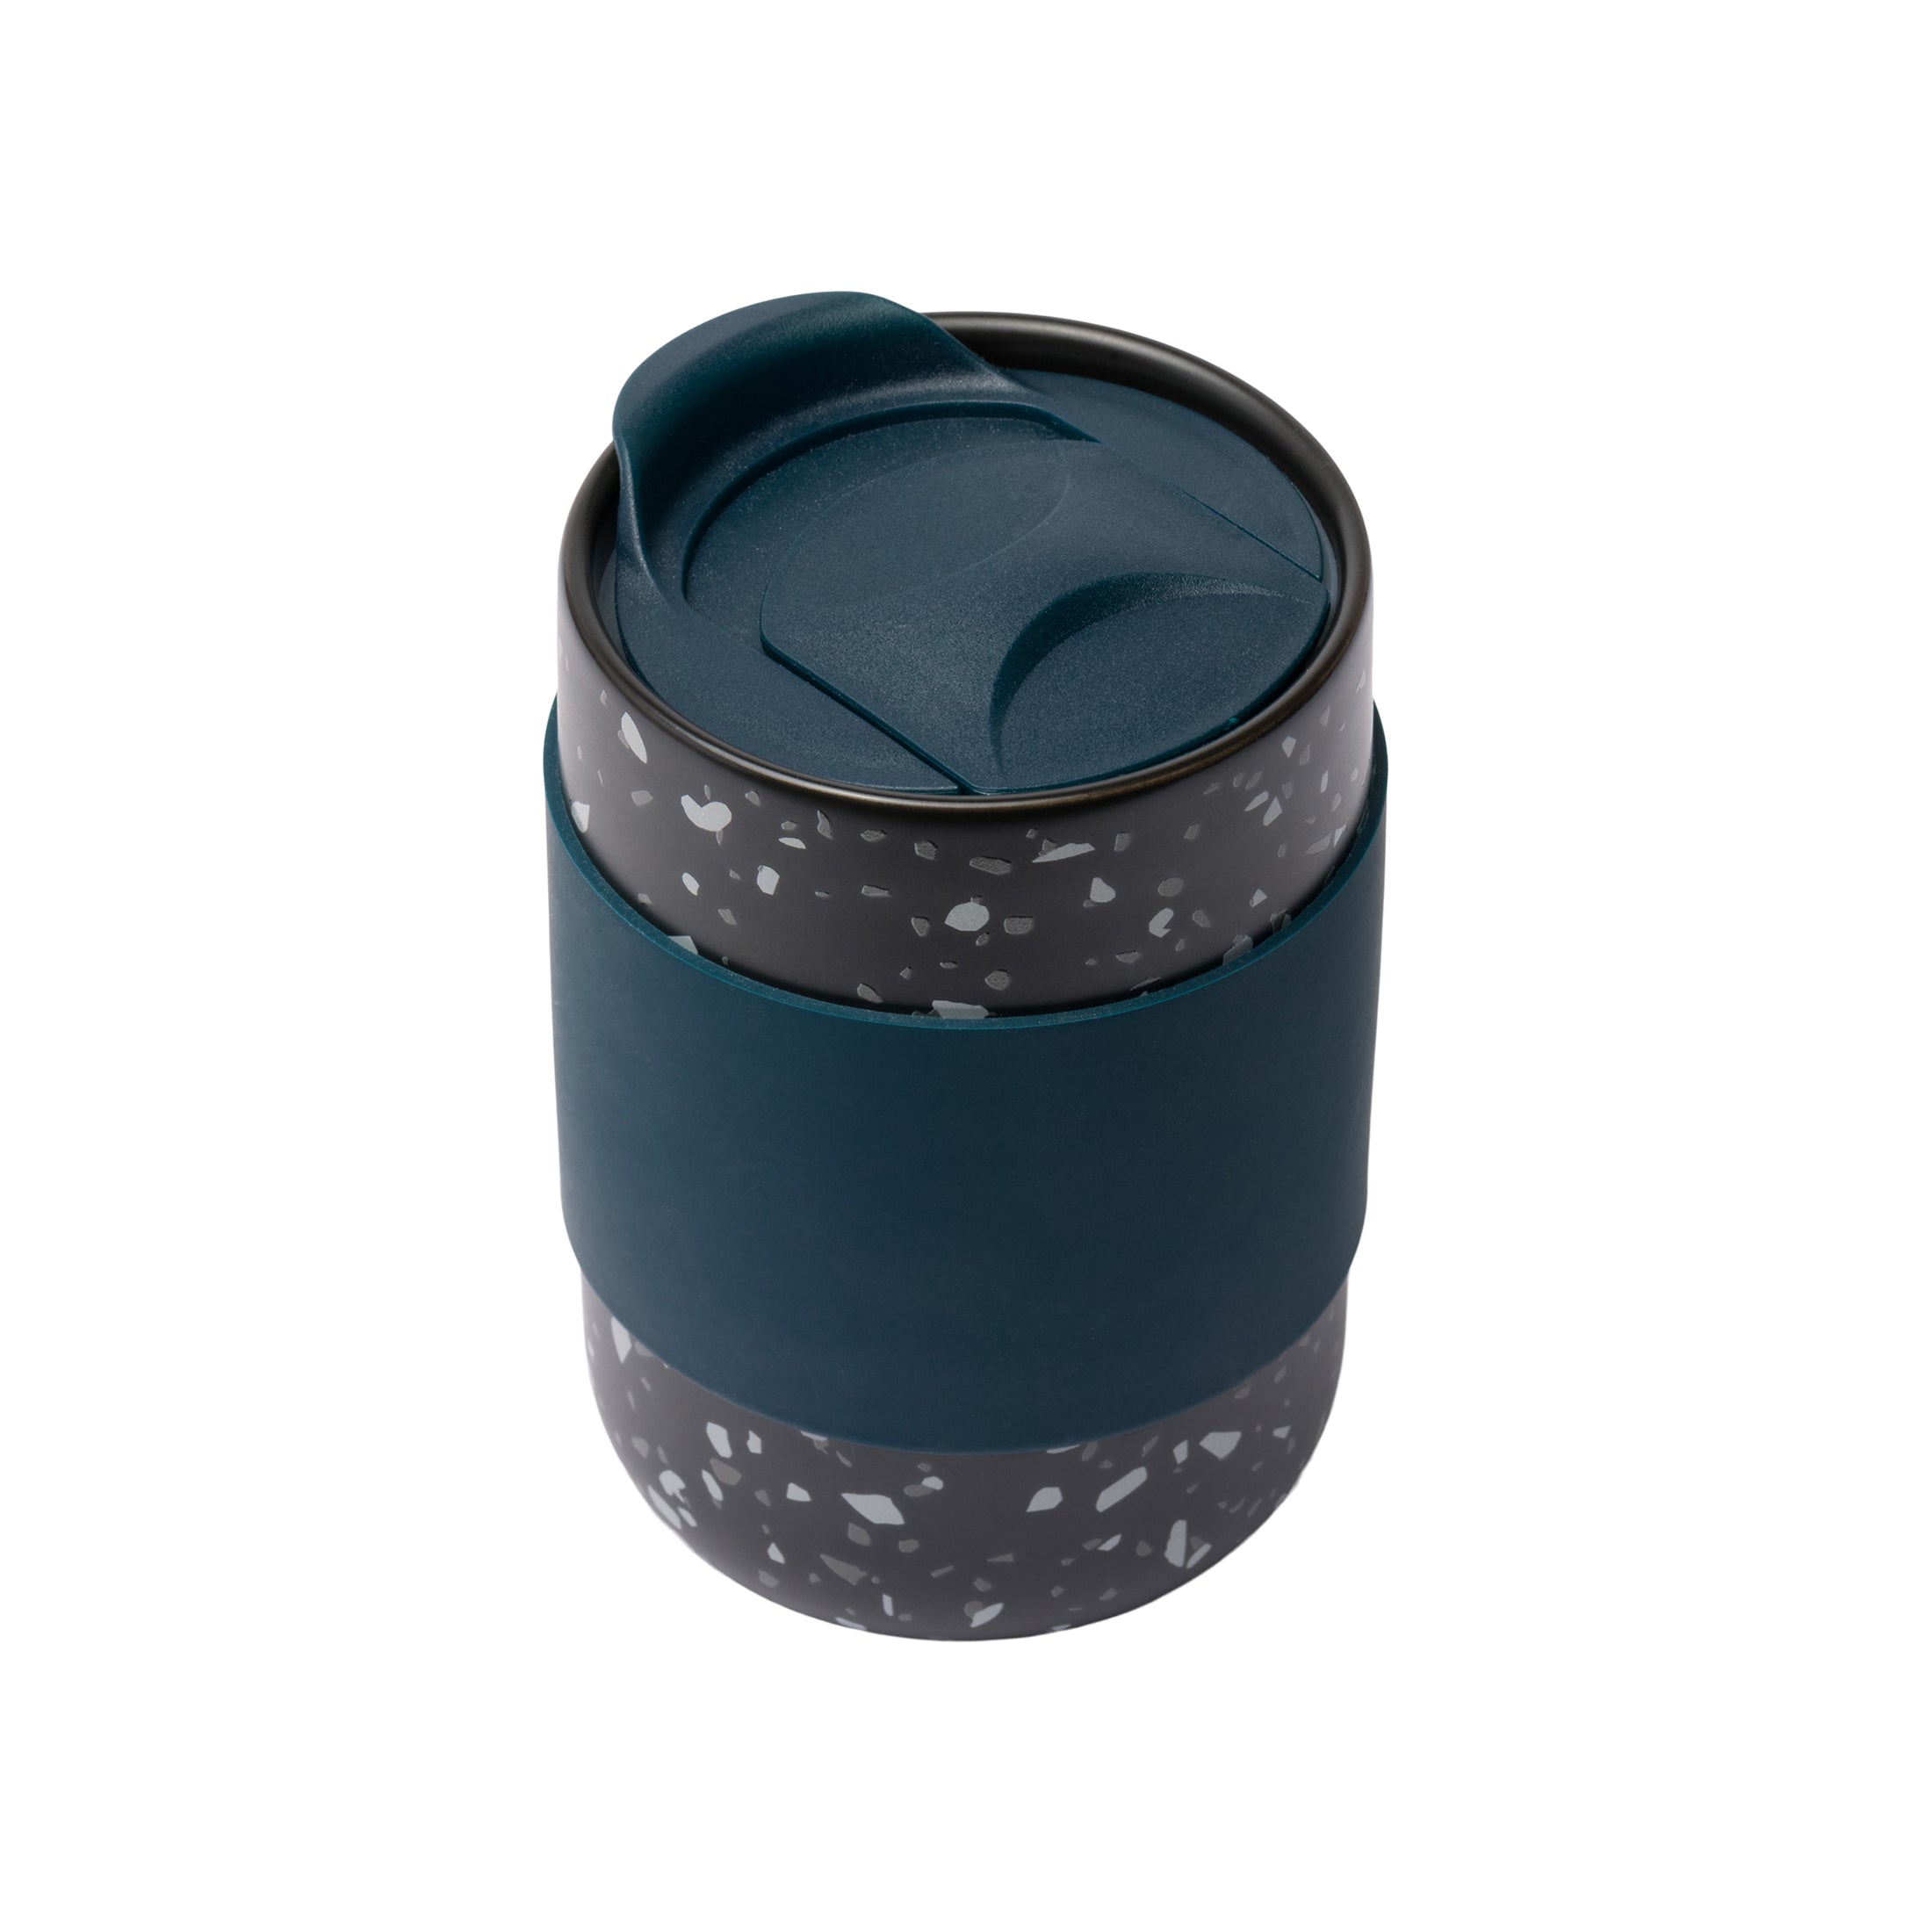 Herring & Bones - Concept Store Joyeux - Gentlemen's Hardware - Mugs - Travel Mug en céramique terrazzo